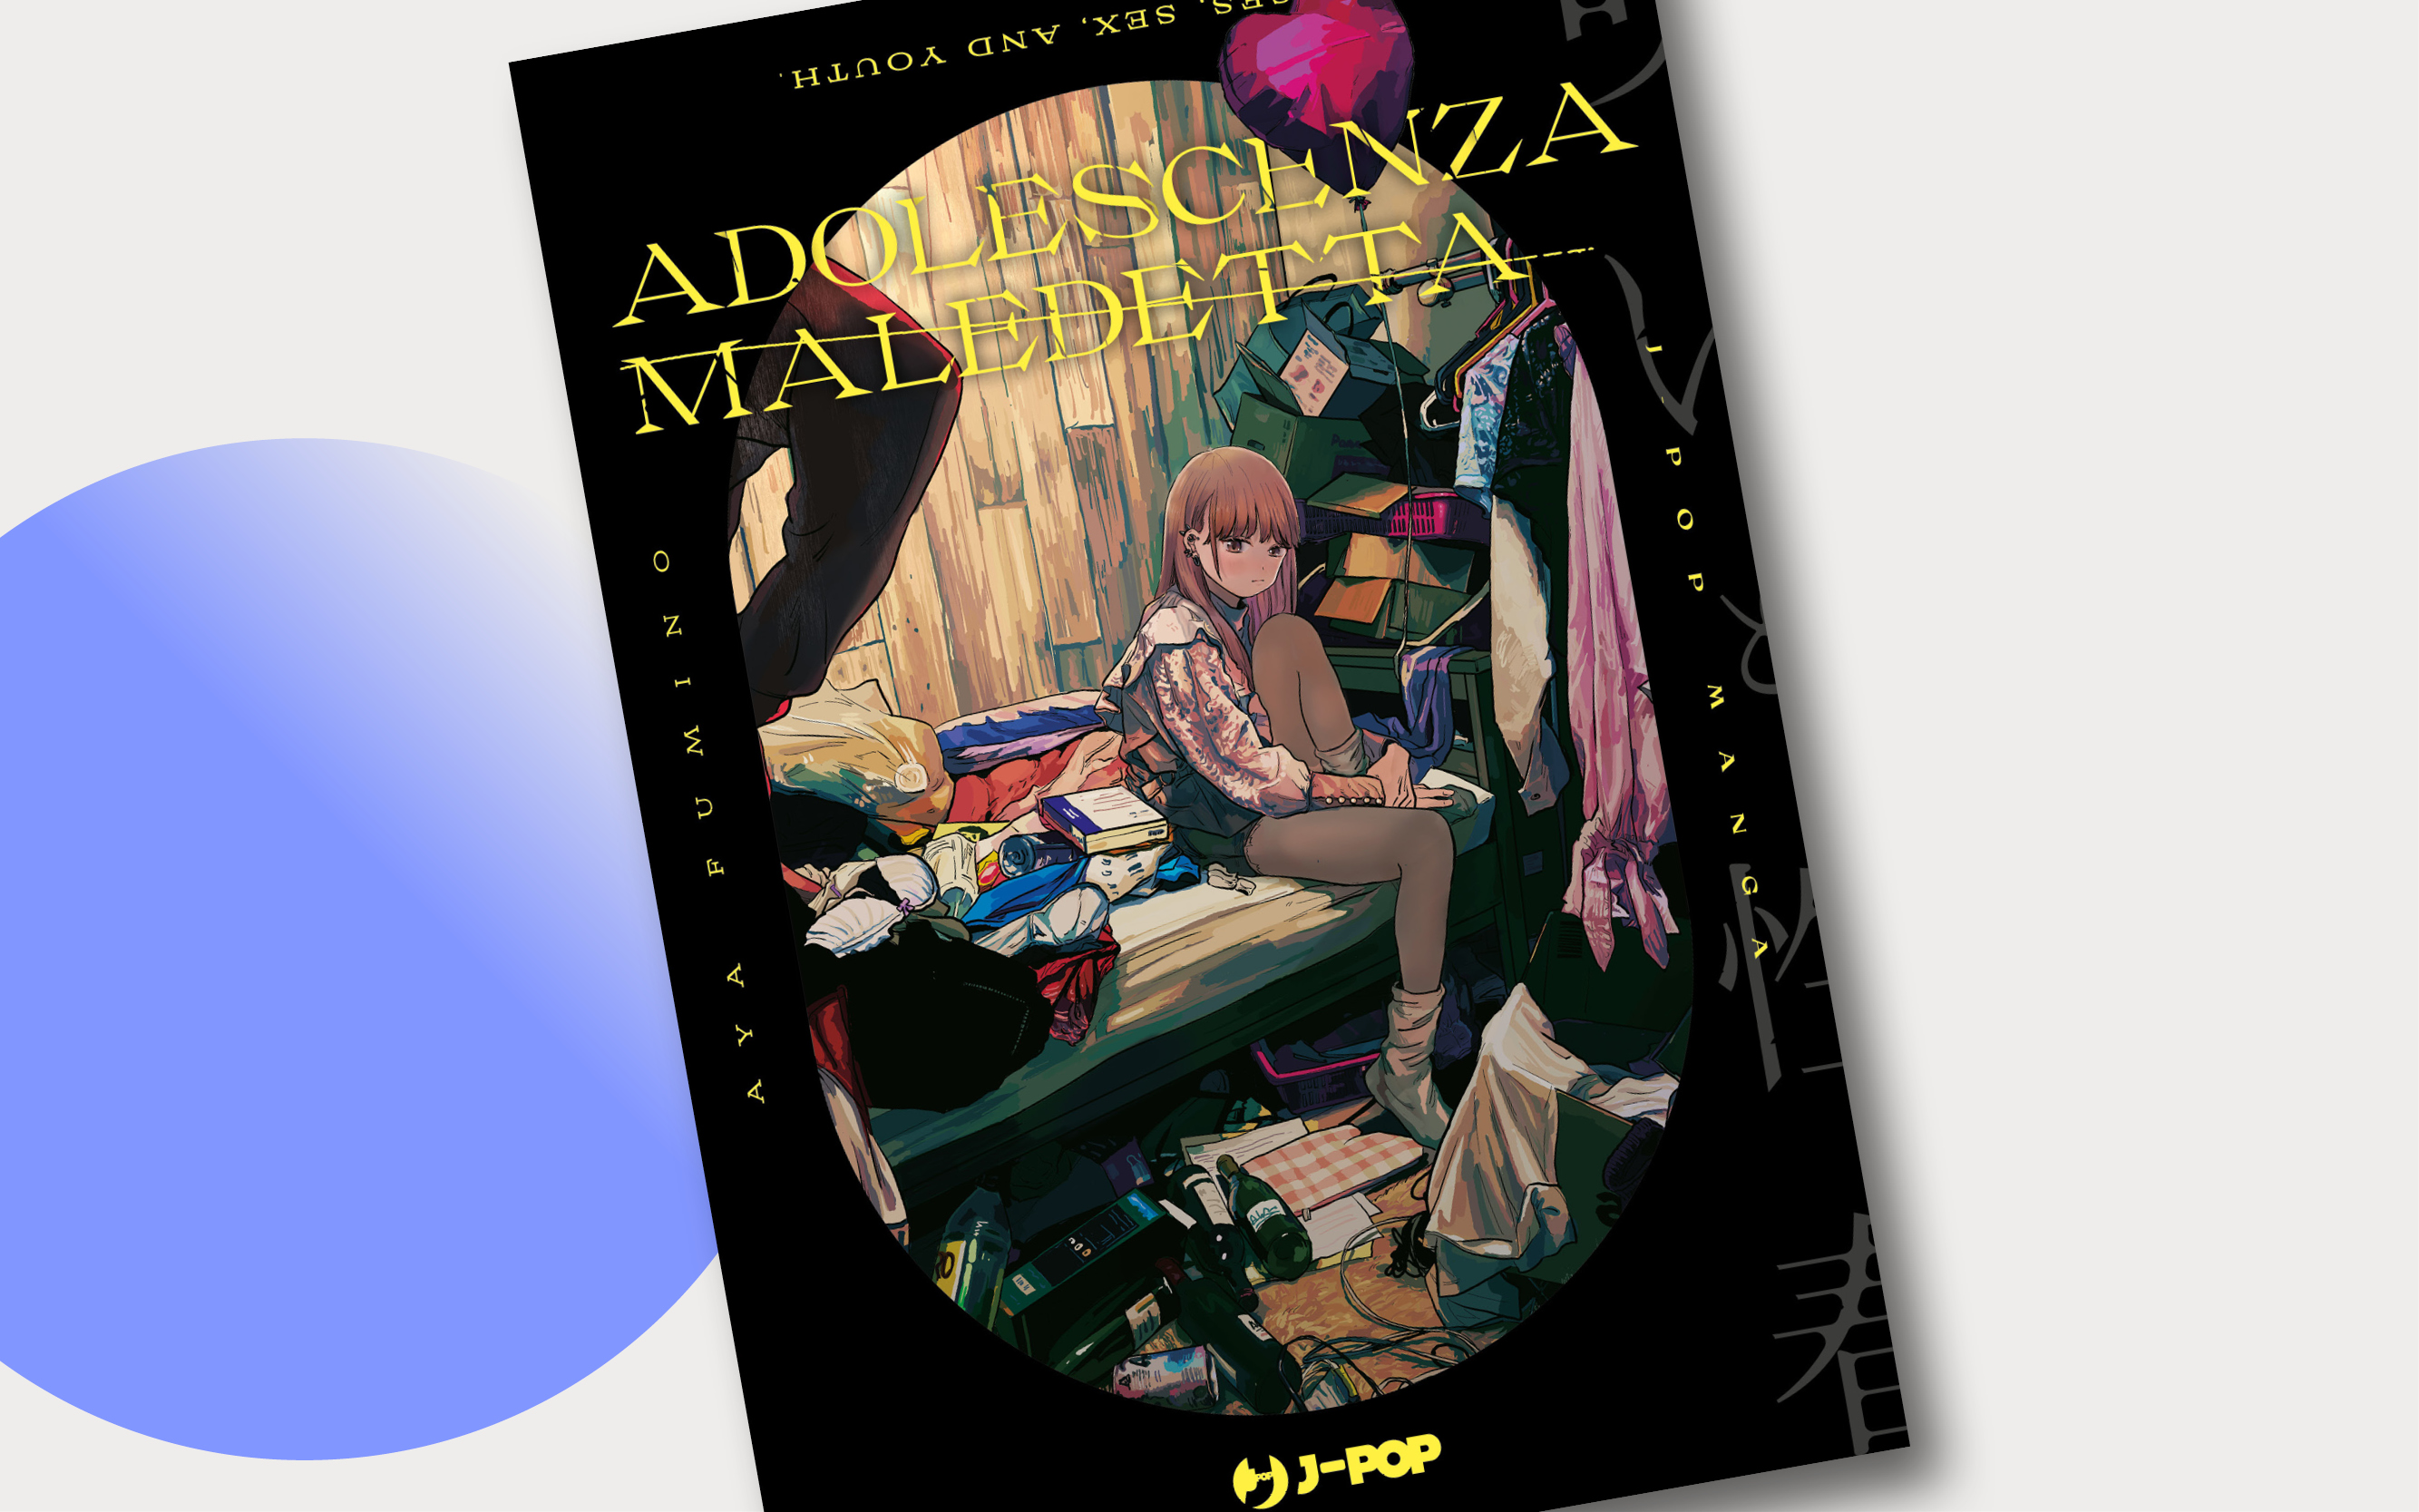 J-POP Manga presenta Adolescenza Maledetta di Aya Fumino